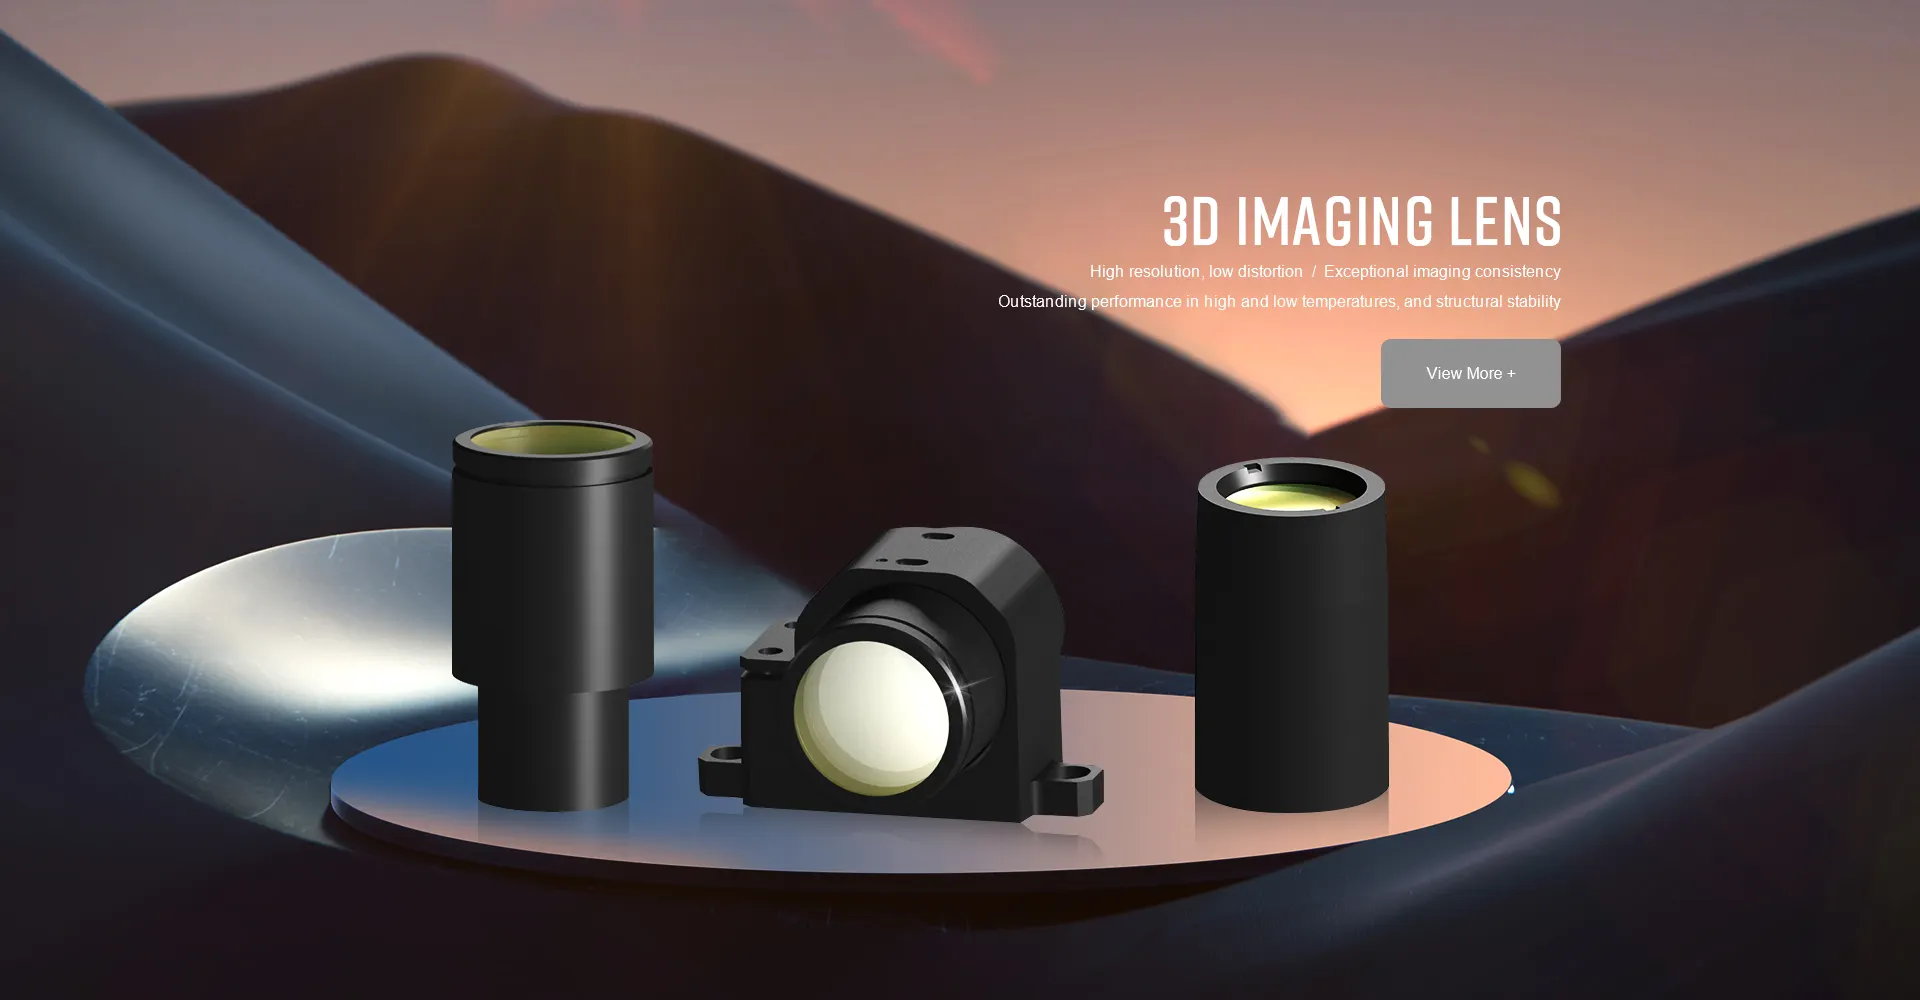 1/1.2" sensor 0.92X magnification 92mm F2.15 Stereo vision lens high performance 0.2% Low distortion 3D imaging lenses